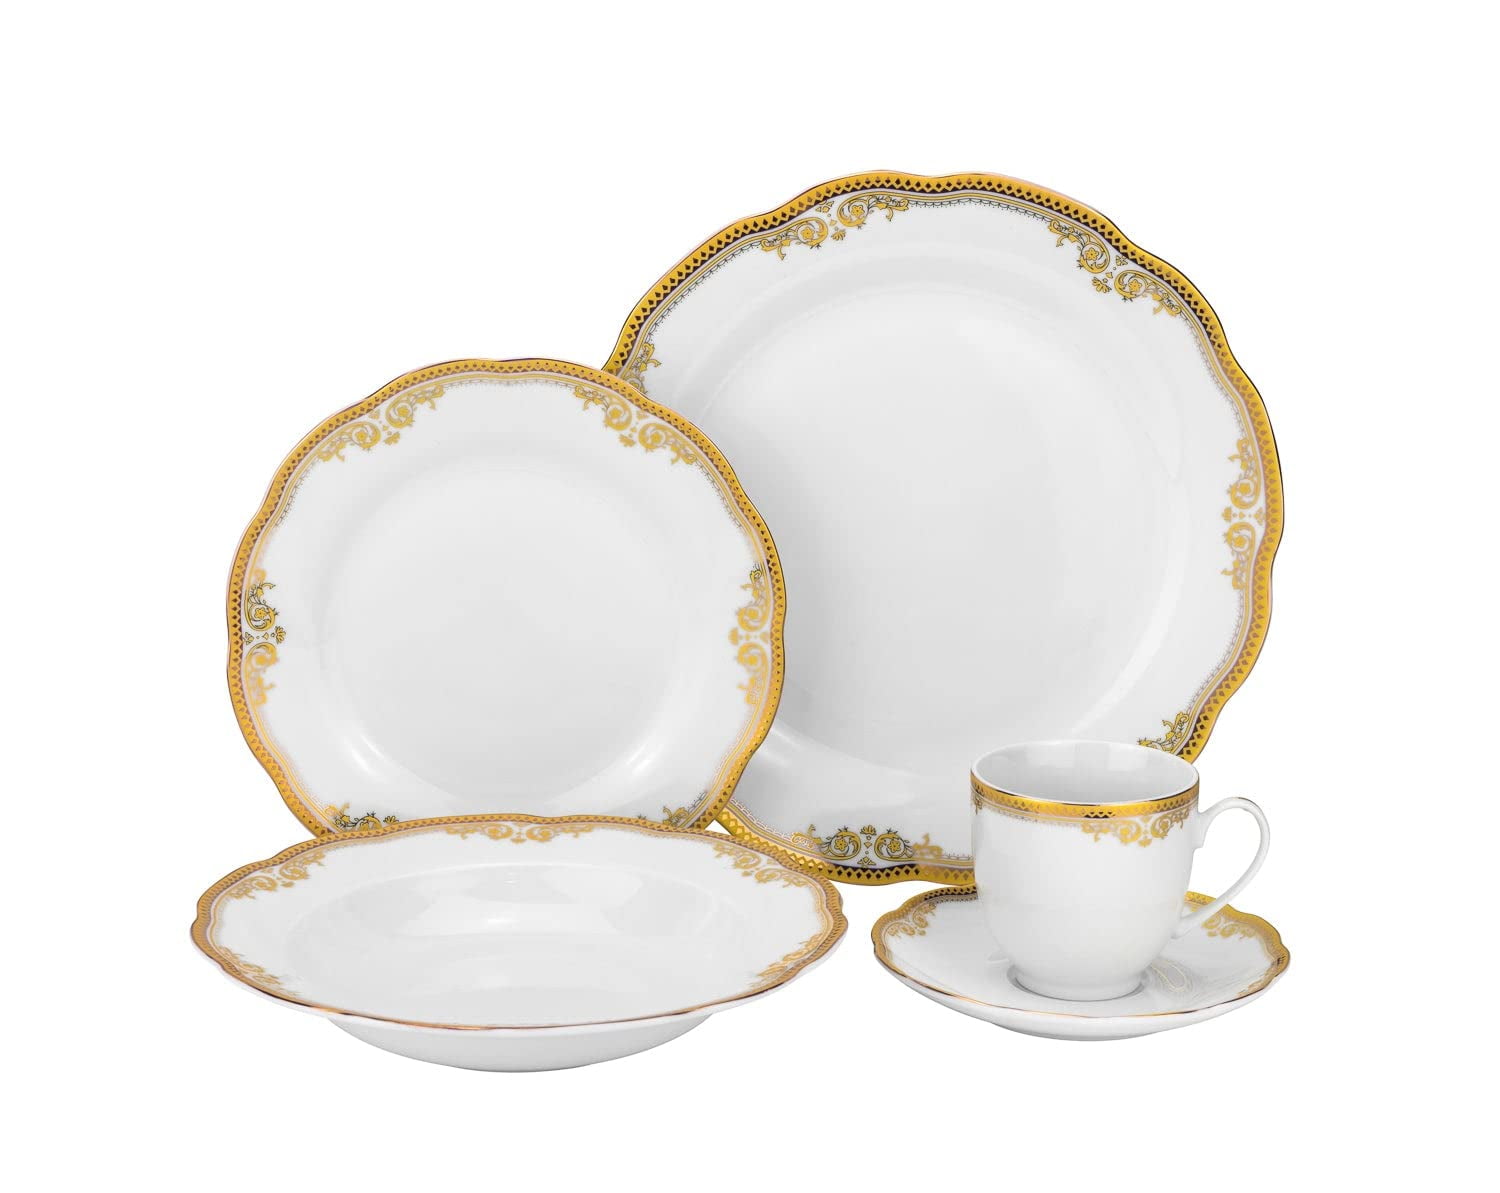 Buy M07022 Luxury Fine Porcelain Royal Dinnerware,porcelain / Ceramic  Golden Rim Dinner Set,exquisite Tableware from Shenzhen Excellence  Industrial Development Co., Ltd., China